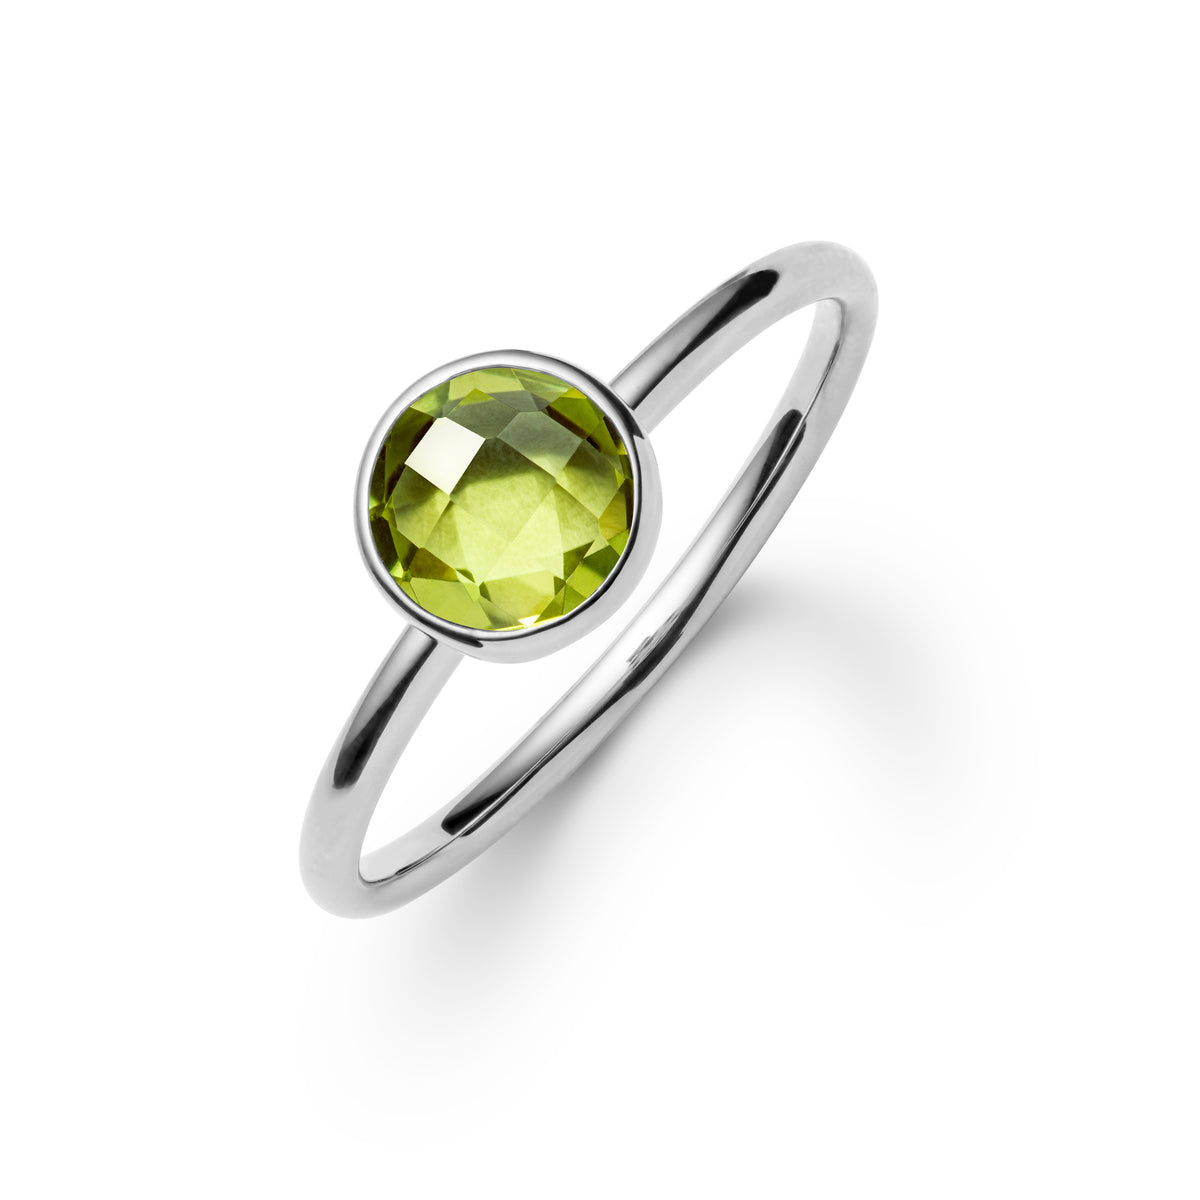 Vibrant Peridot Engagement Rings - Cape Diamonds Blog